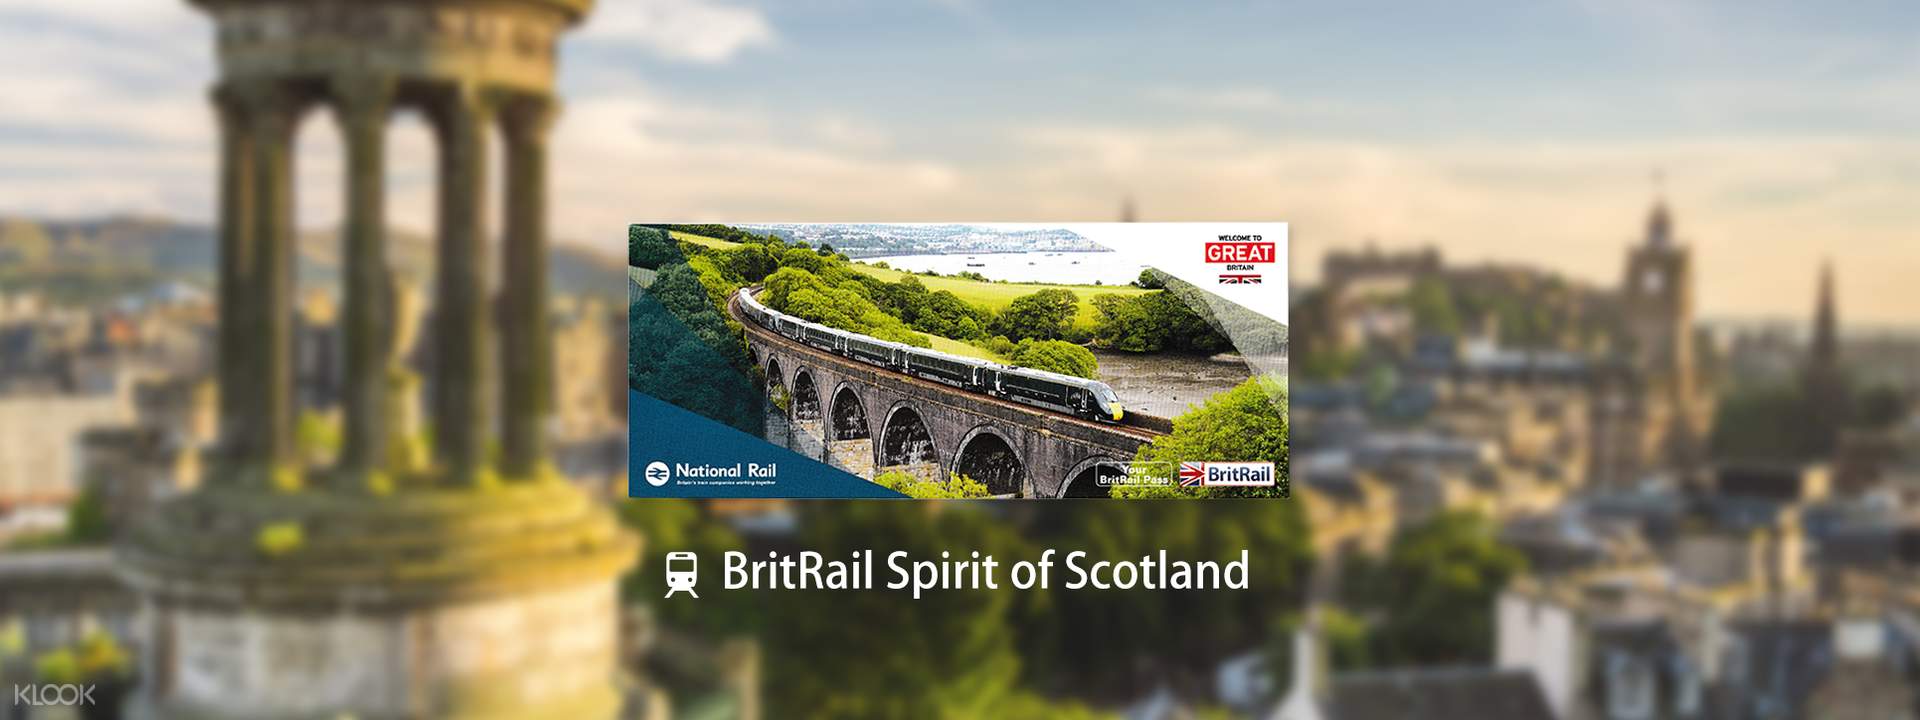 scotland rail travel pass